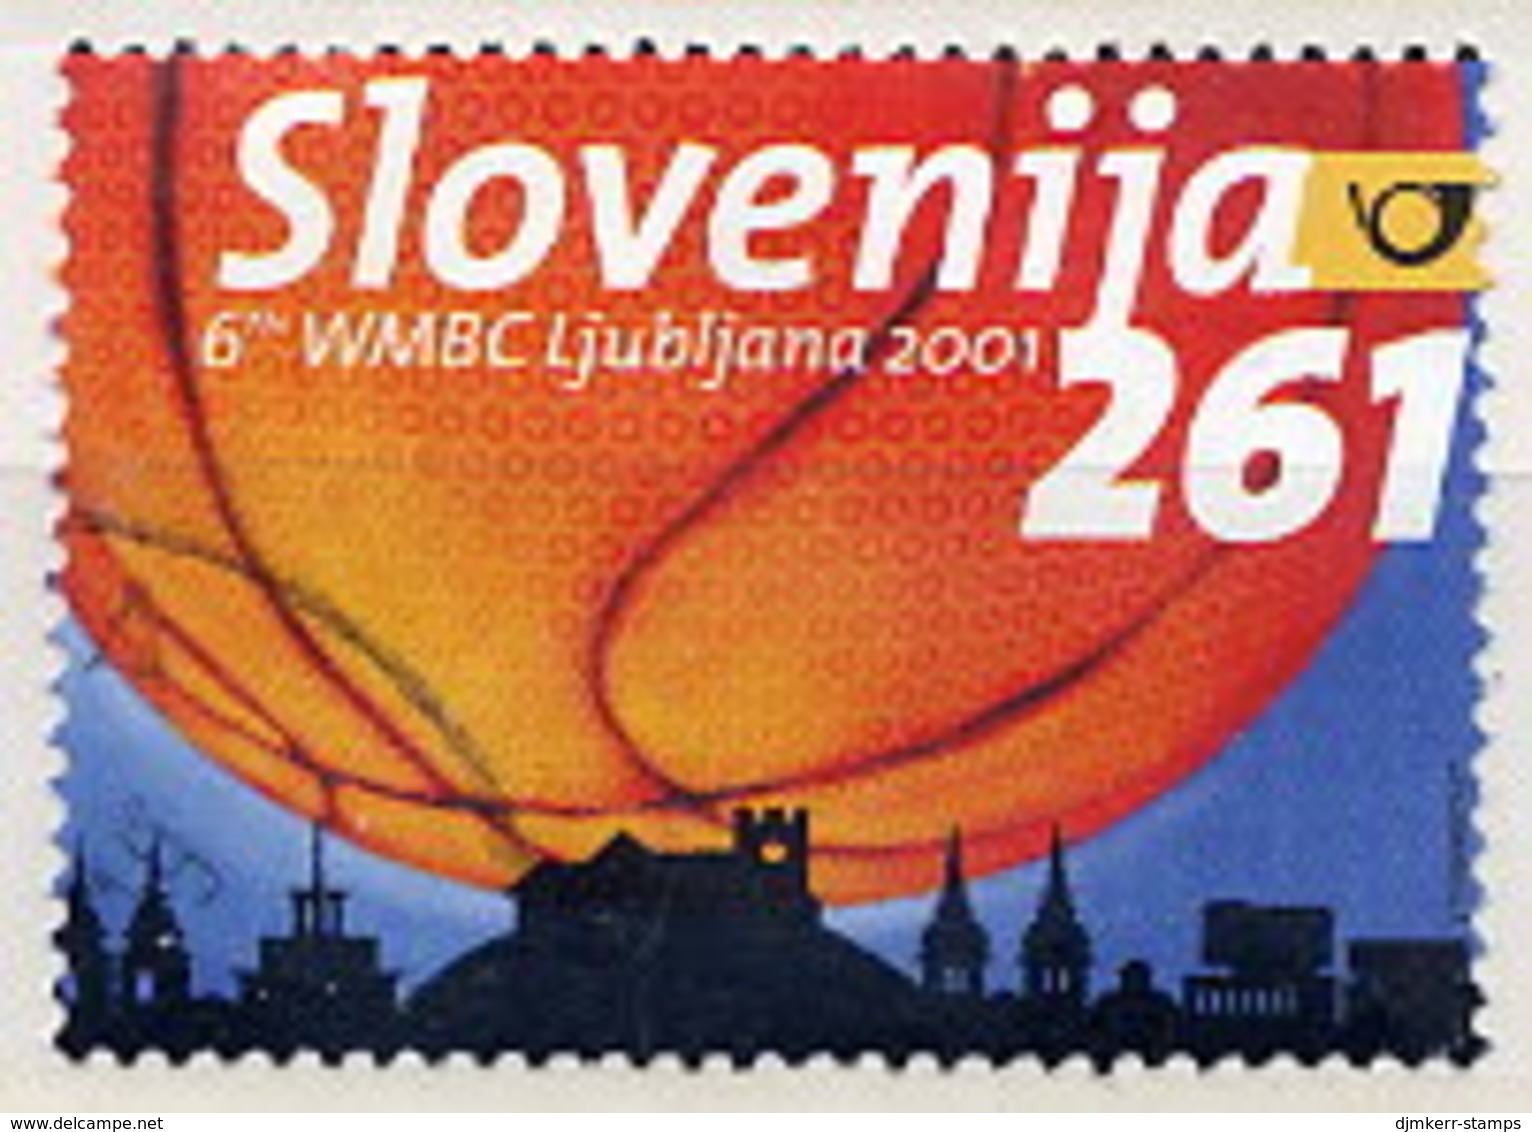 SLOVENIA 2001 Basketball World Championship  Used  Michel 358 - Slovenia